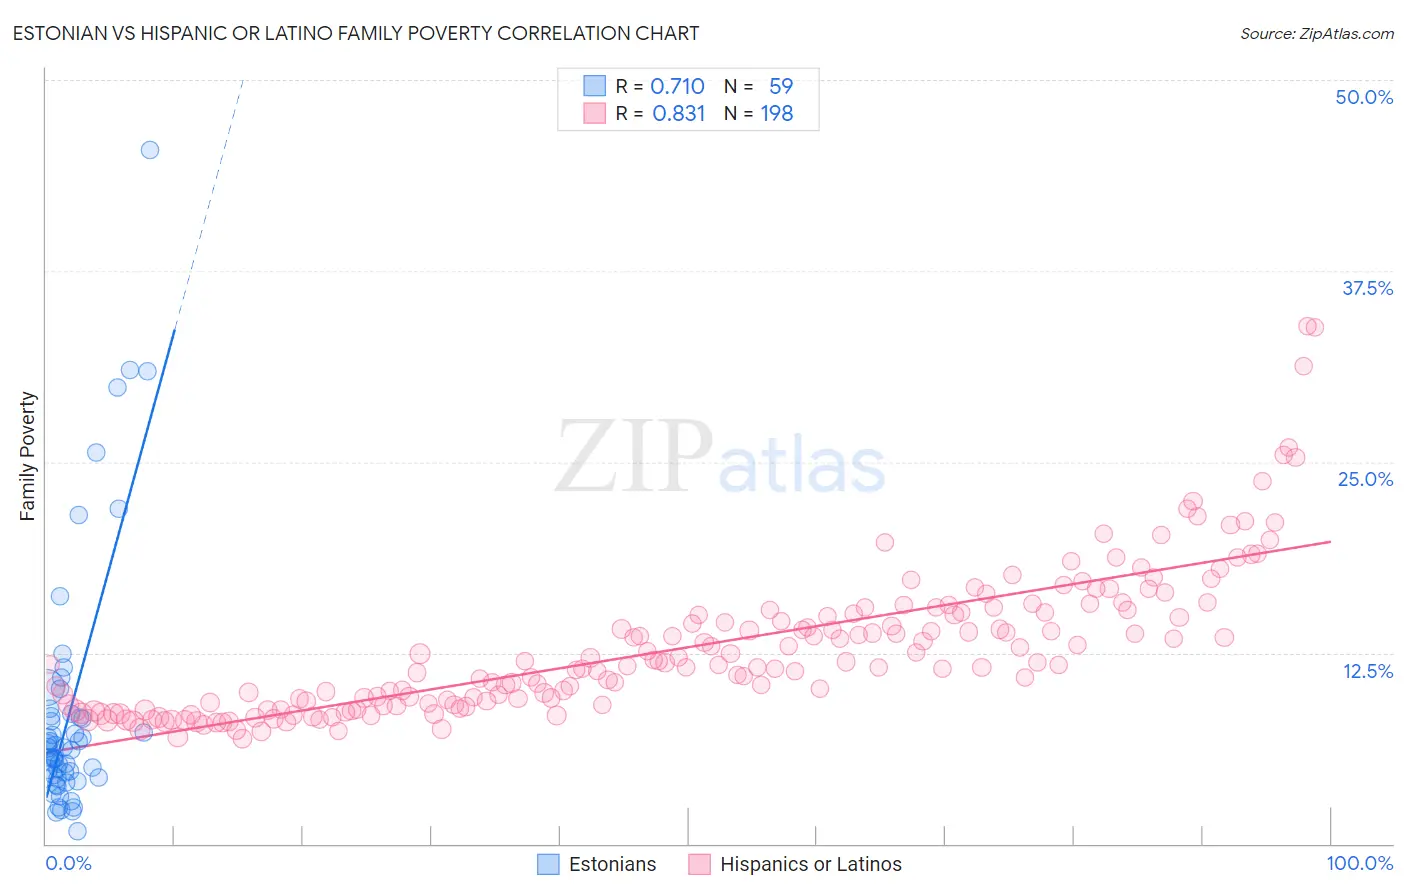 Estonian vs Hispanic or Latino Family Poverty